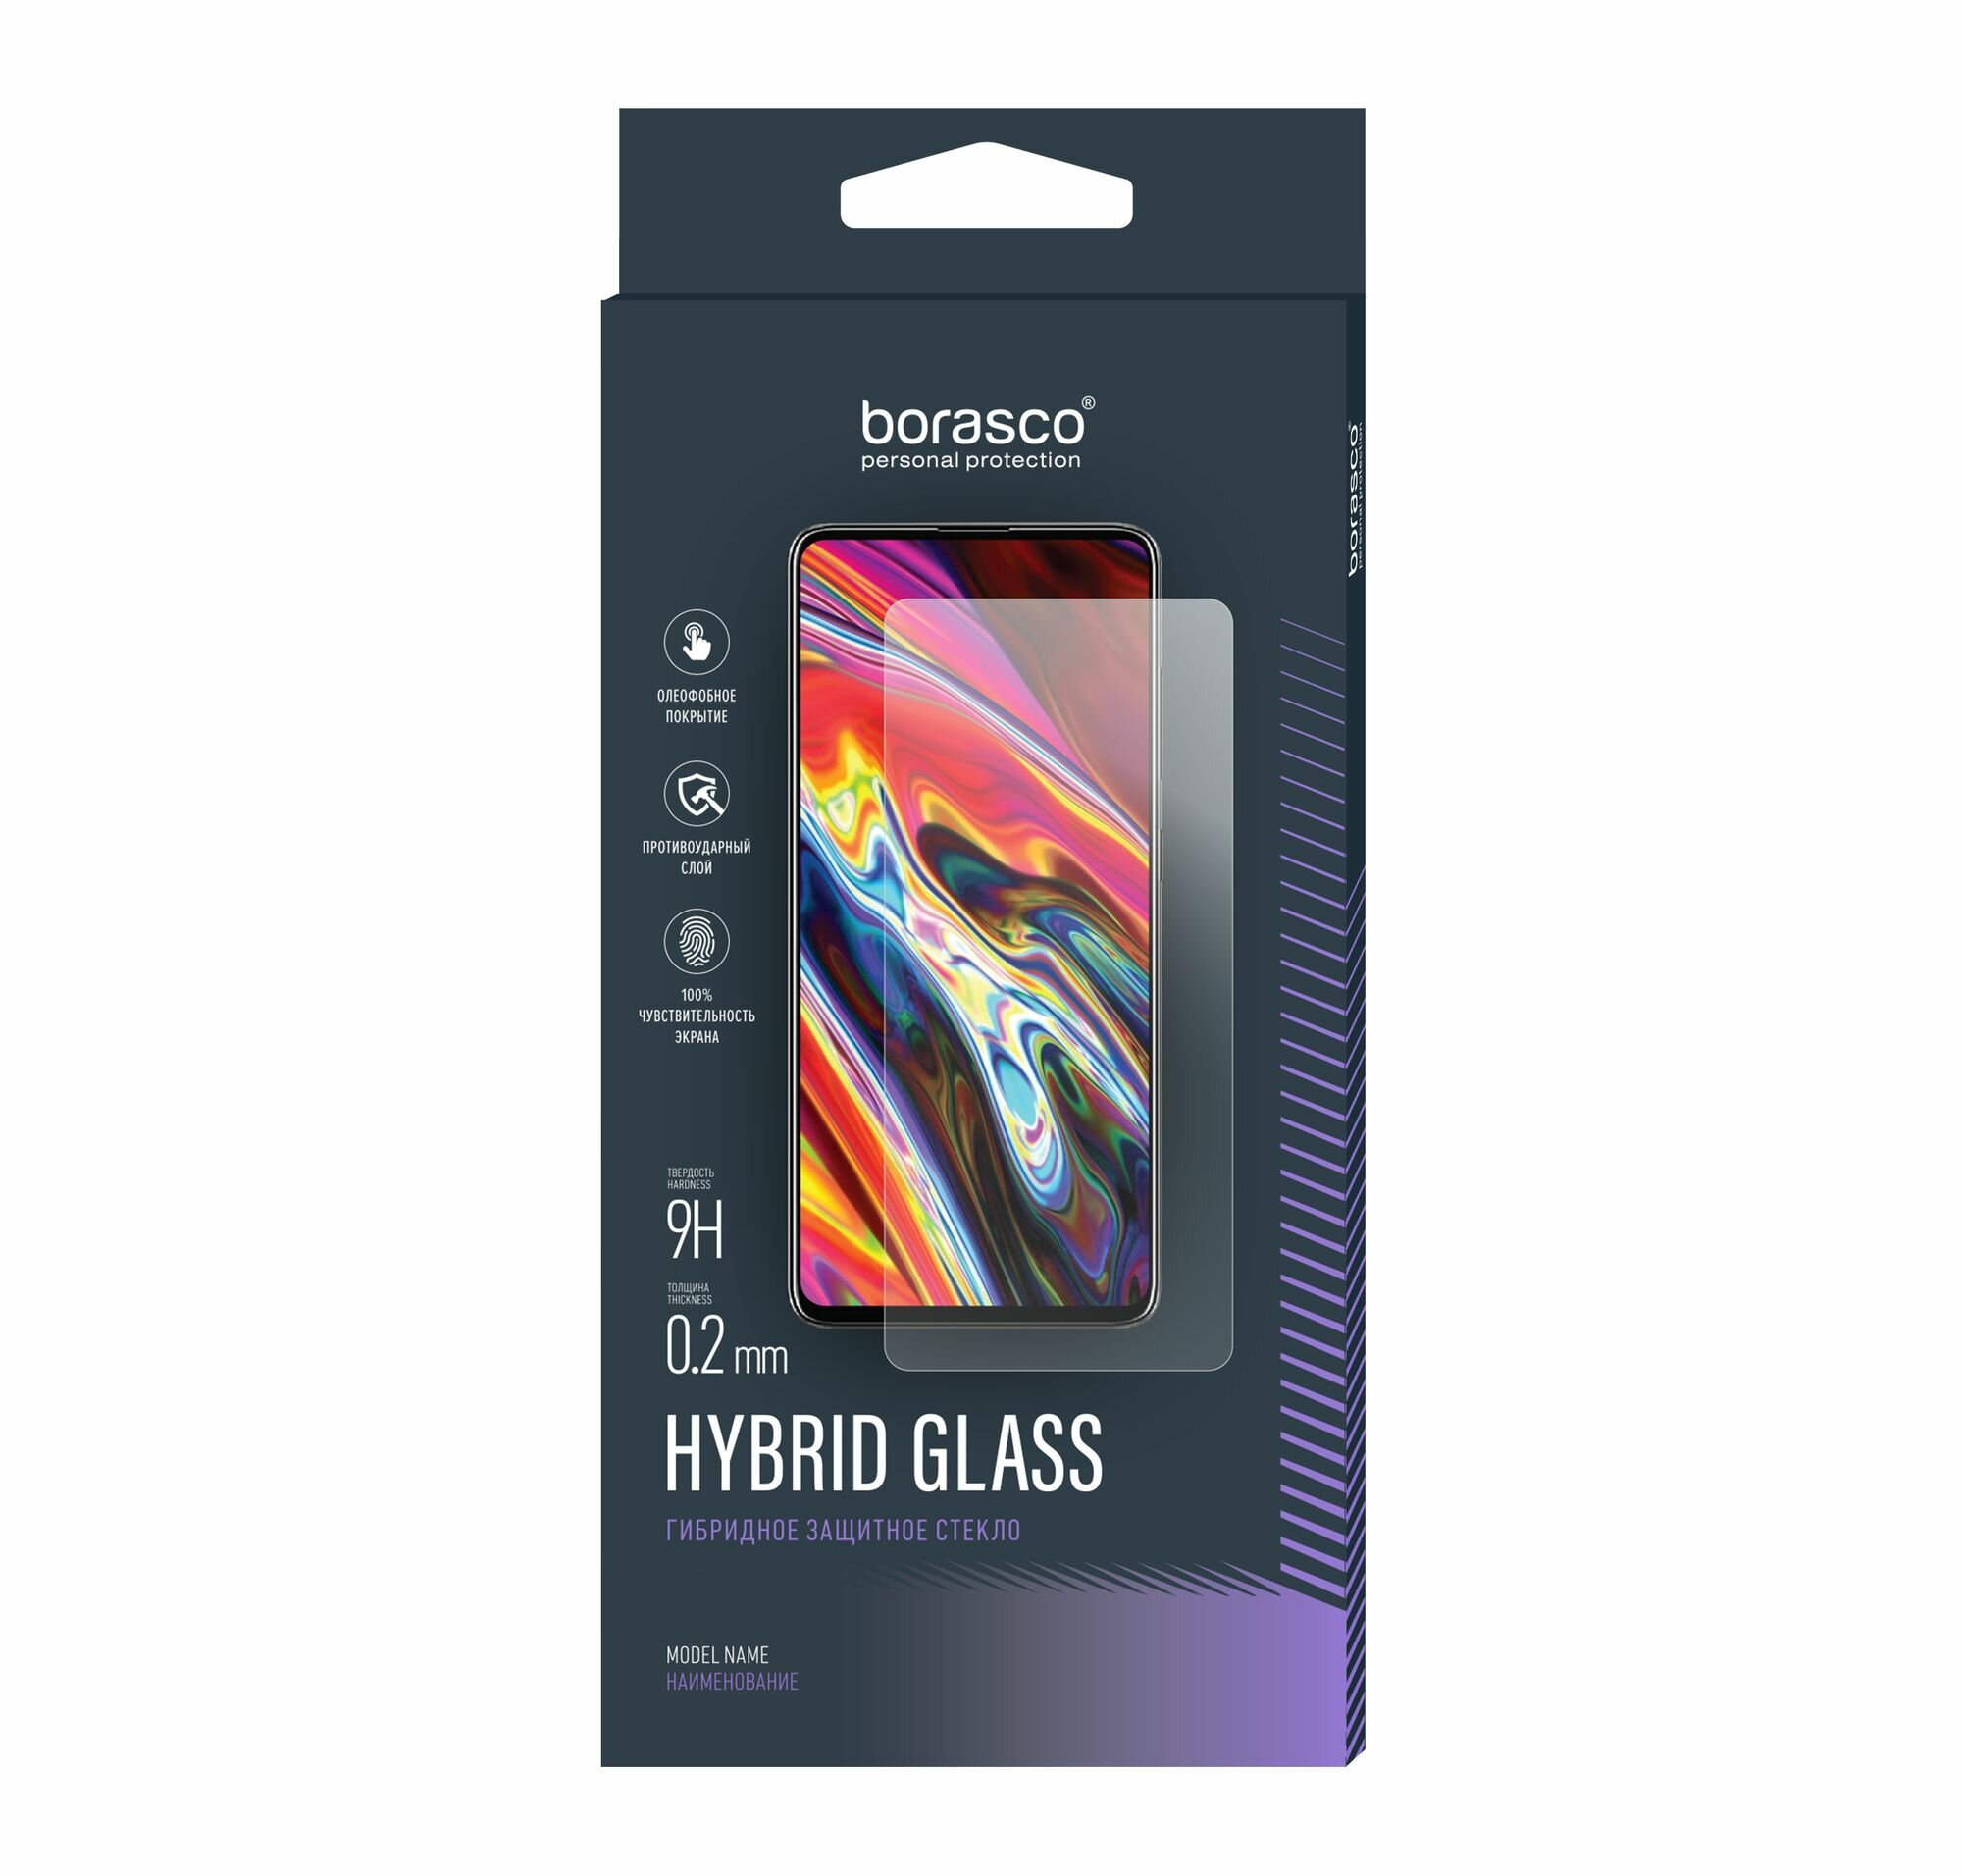 Стекло защитное Hybrid Glass VSP 026 мм для Alcatel One Touch Pixi 8 9005x